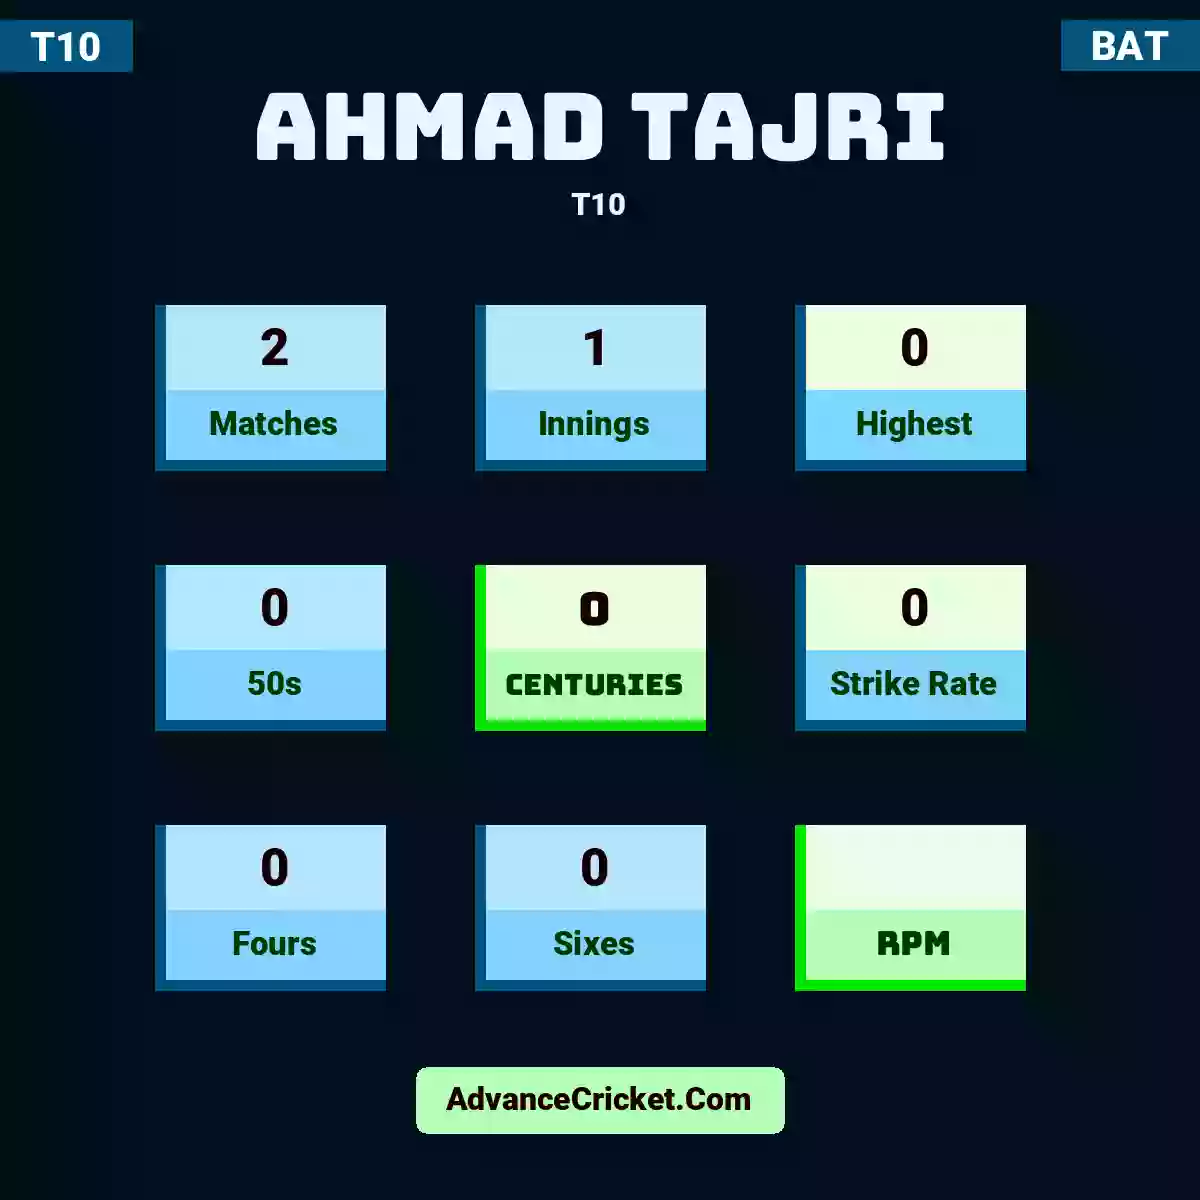 Ahmad Tajri T10 , Ahmad Tajri played 2 matches, scored 0 runs as highest, 0 half-centuries, and 0 centuries, with a strike rate of 0. A.Tajri hit 0 fours and 0 sixes.